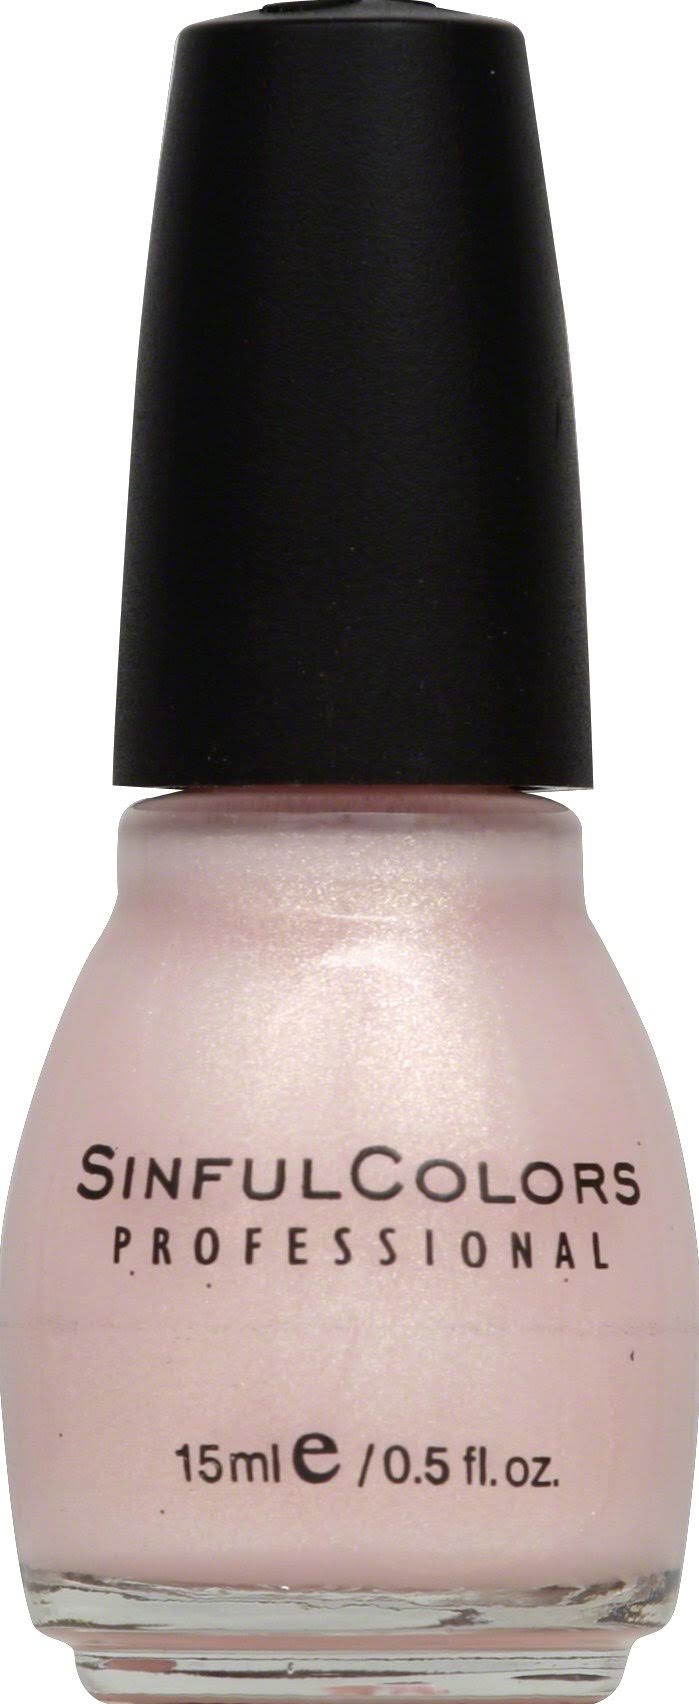 Sinful Colors Professional Nail Polish - Glass Pink